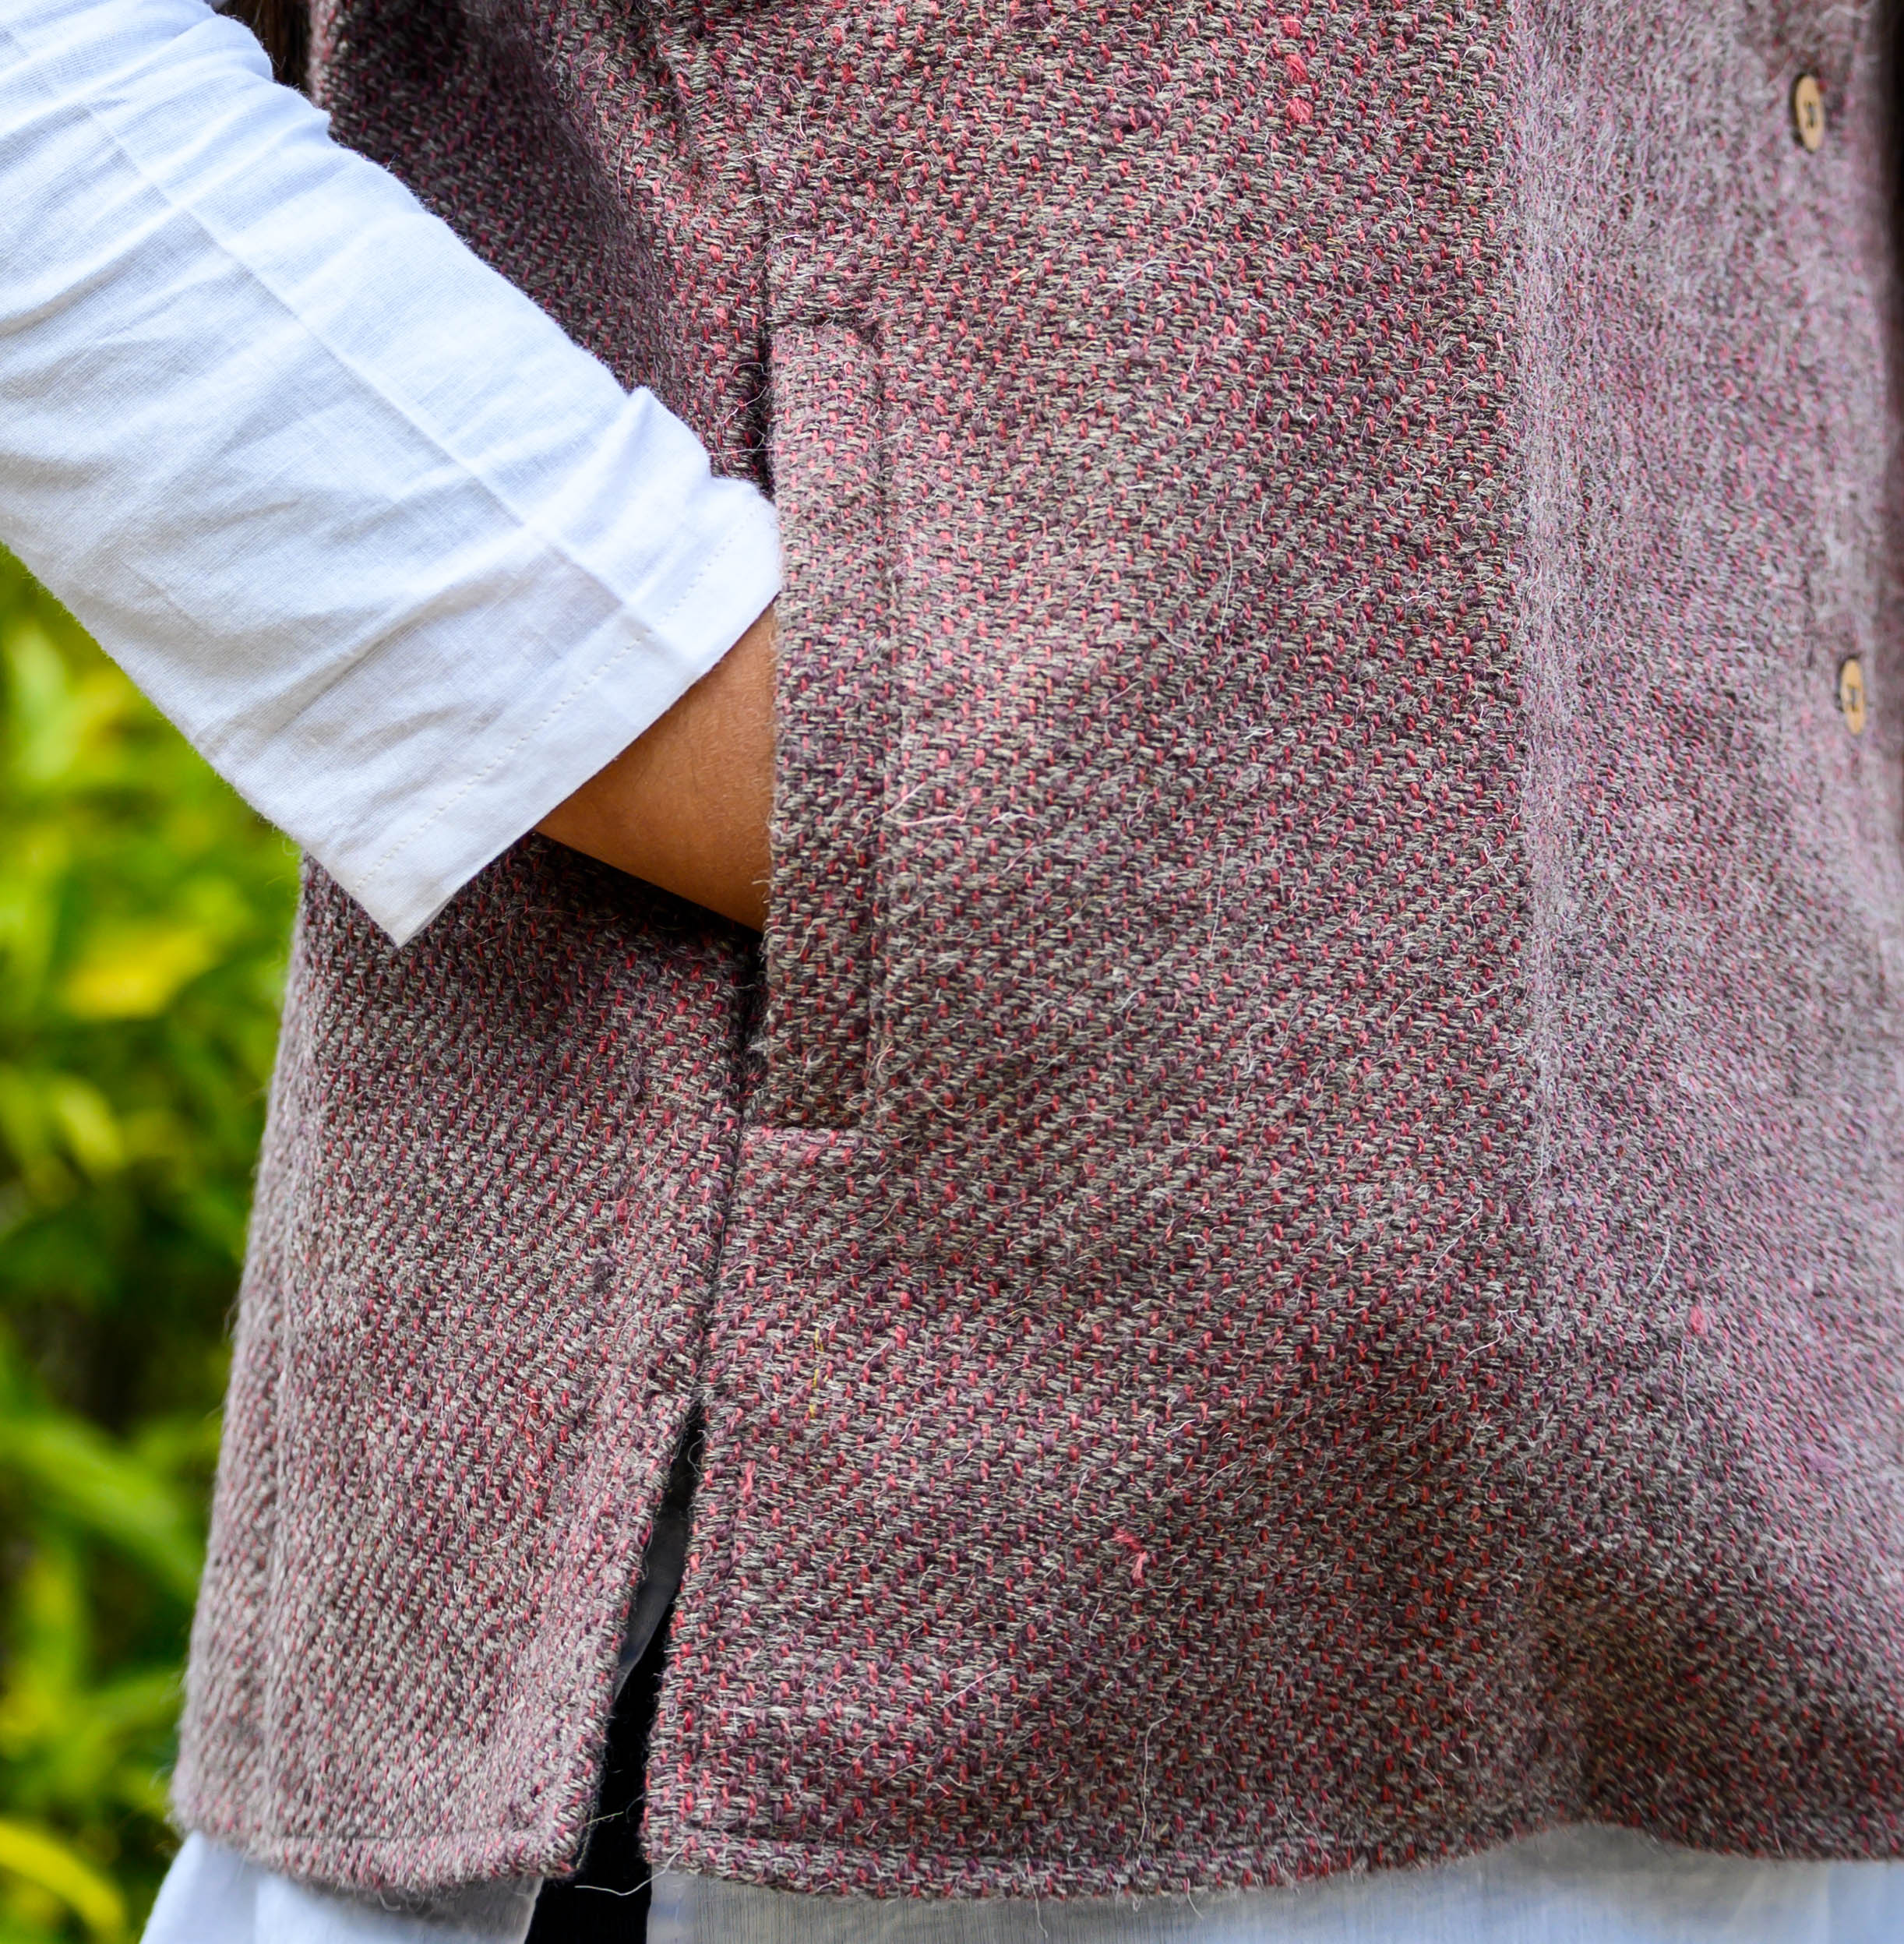 Brown Desi Sheep Wool Jacket